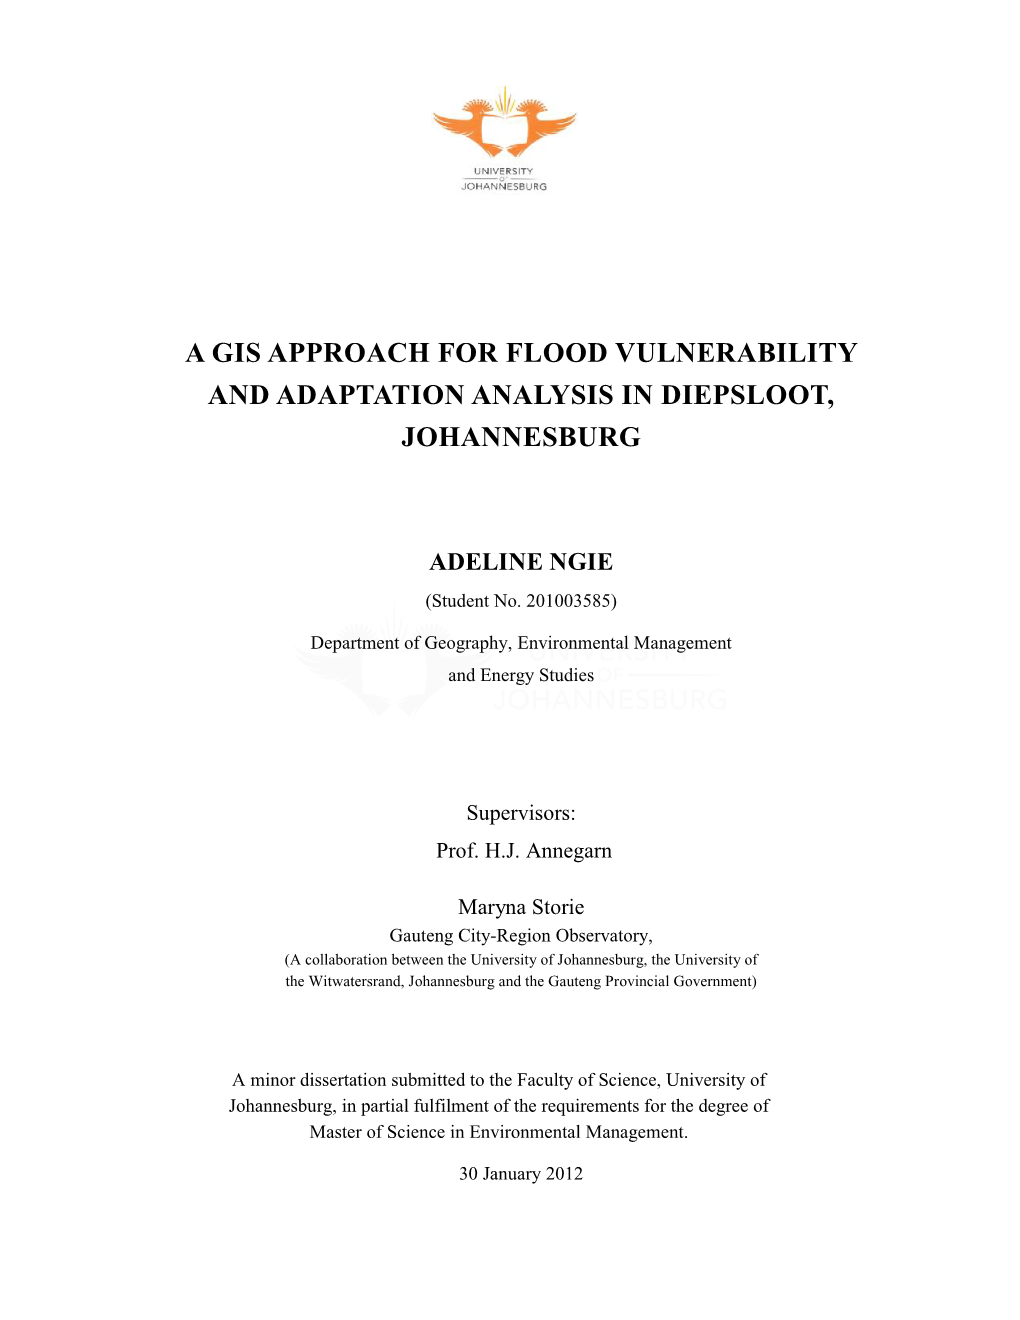 A Gis Approach for Flood Vulnerability and Adaptation Analysis in Diepsloot, Johannesburg